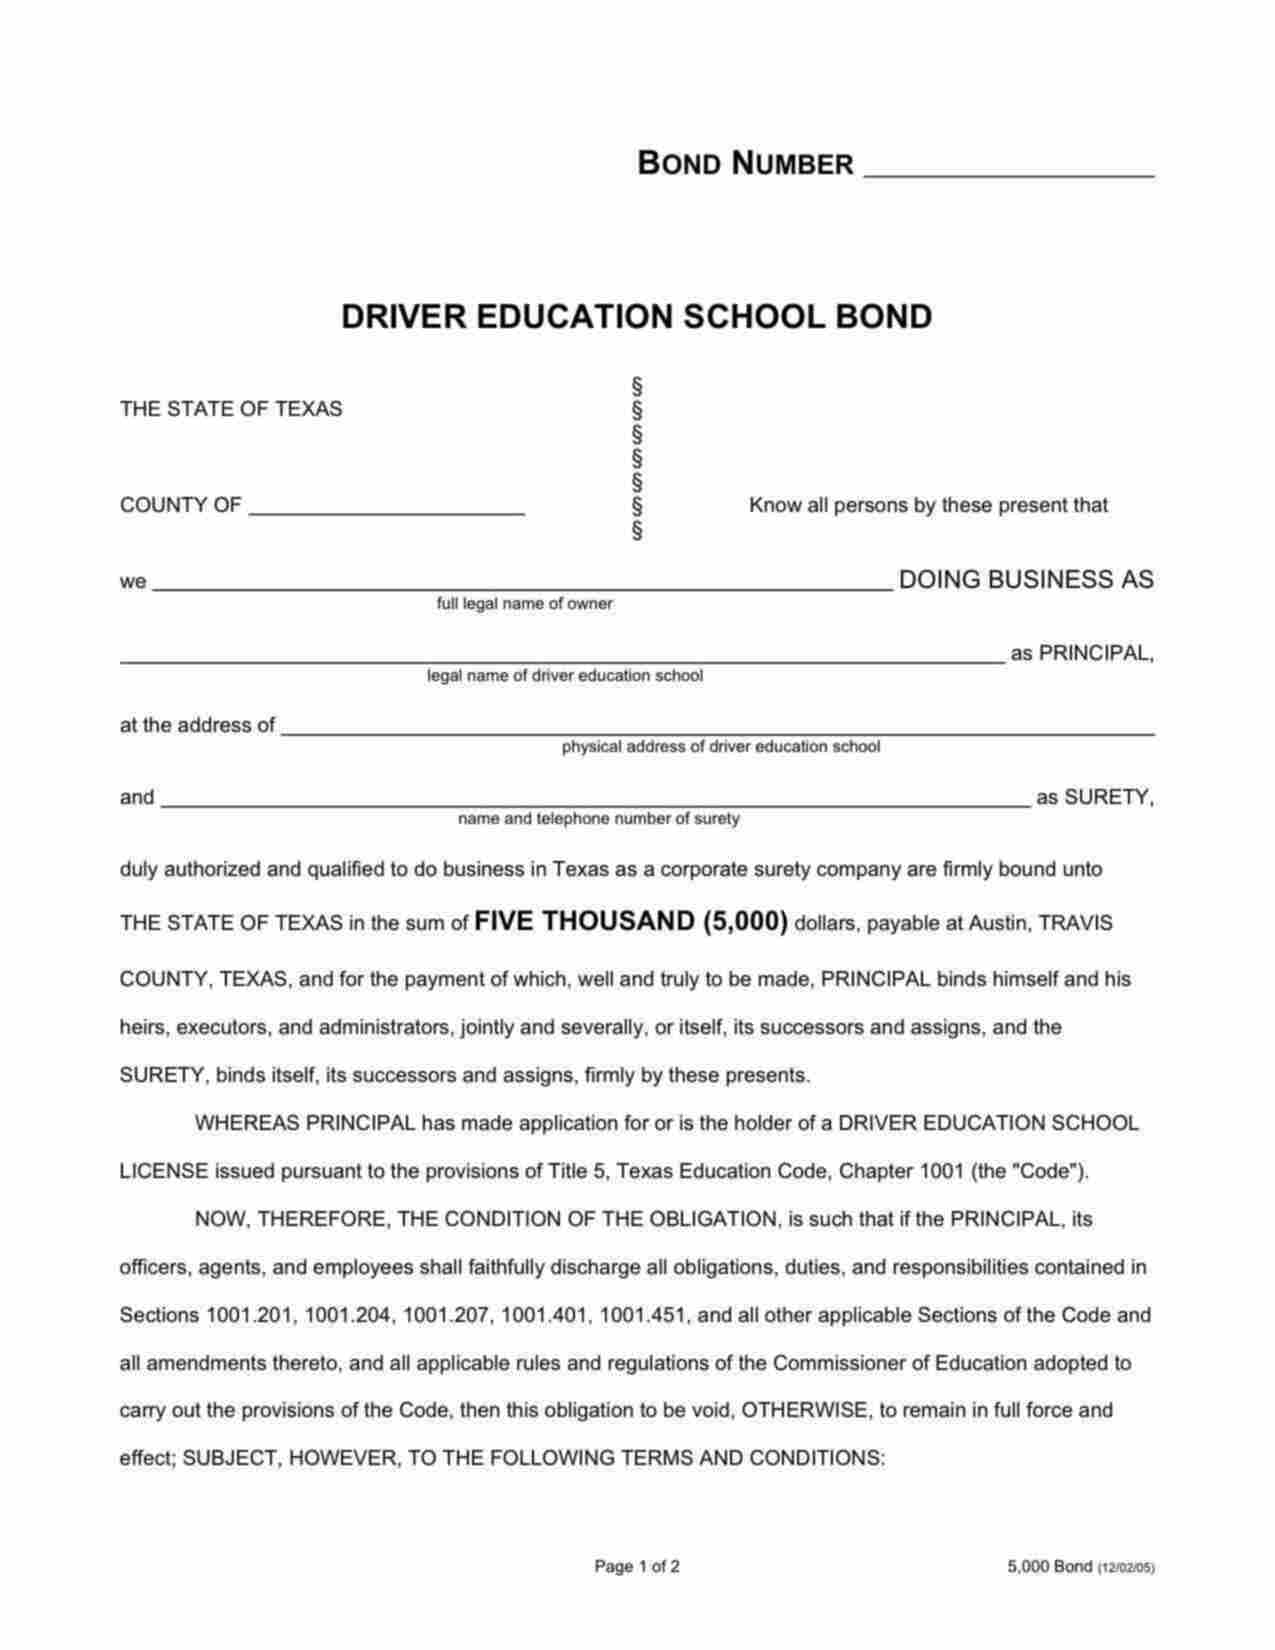 Texas Driver Education School: Branch Location Bond Form